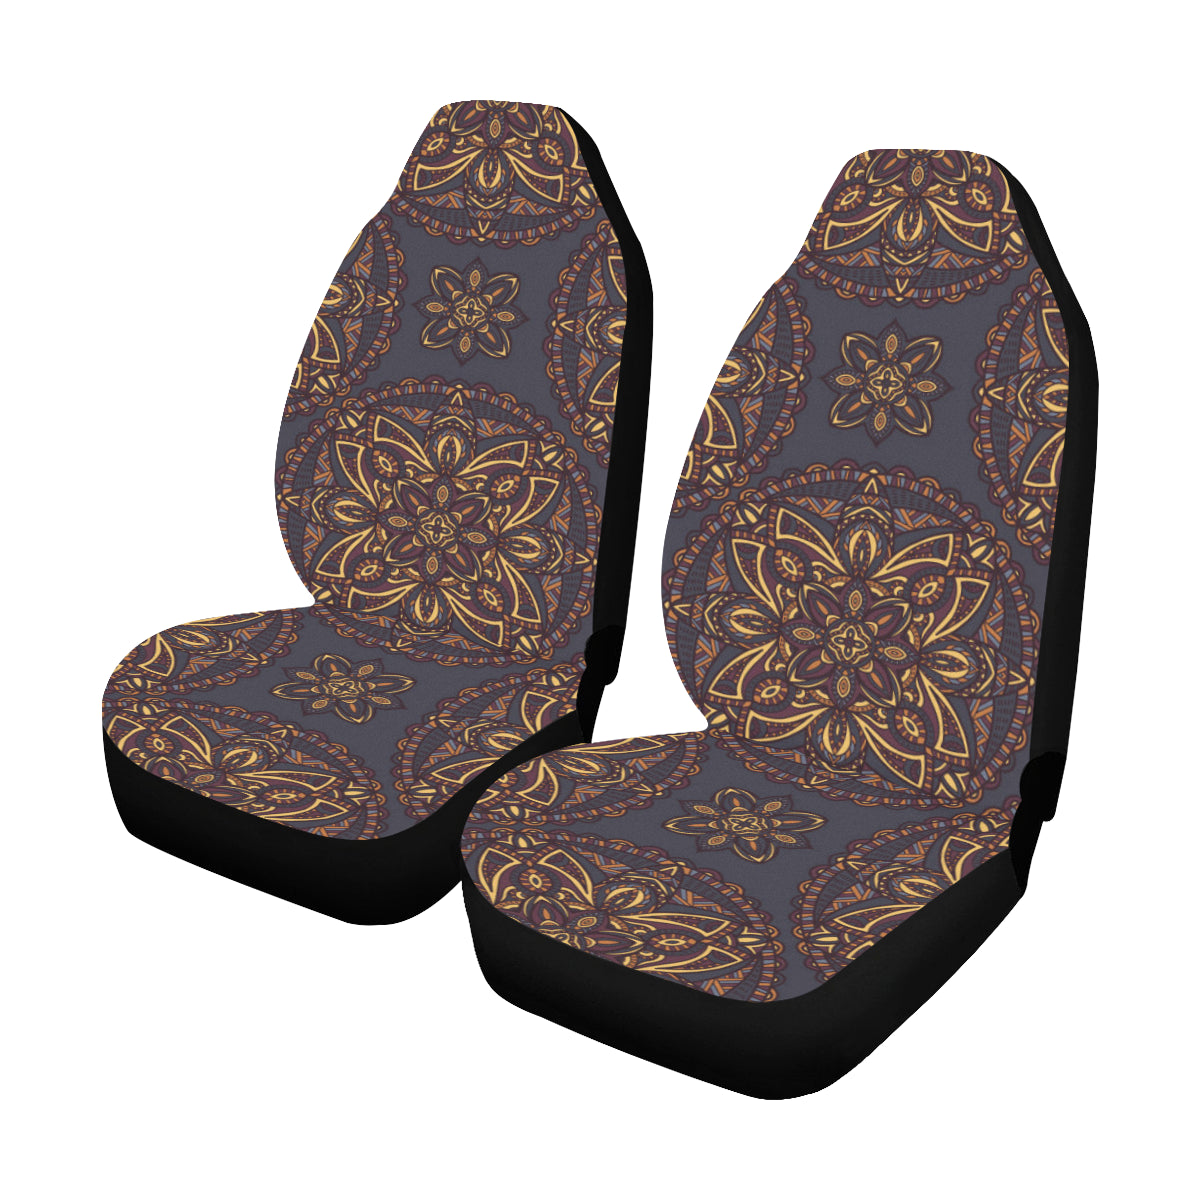 Mandala Boho Car Seat Covers 2 pc, Tribal Indian Pattern Bohemian Oriental Art Front Seat Covers, Car SUV Seat Protector Accessory Decor Starcove Fashion